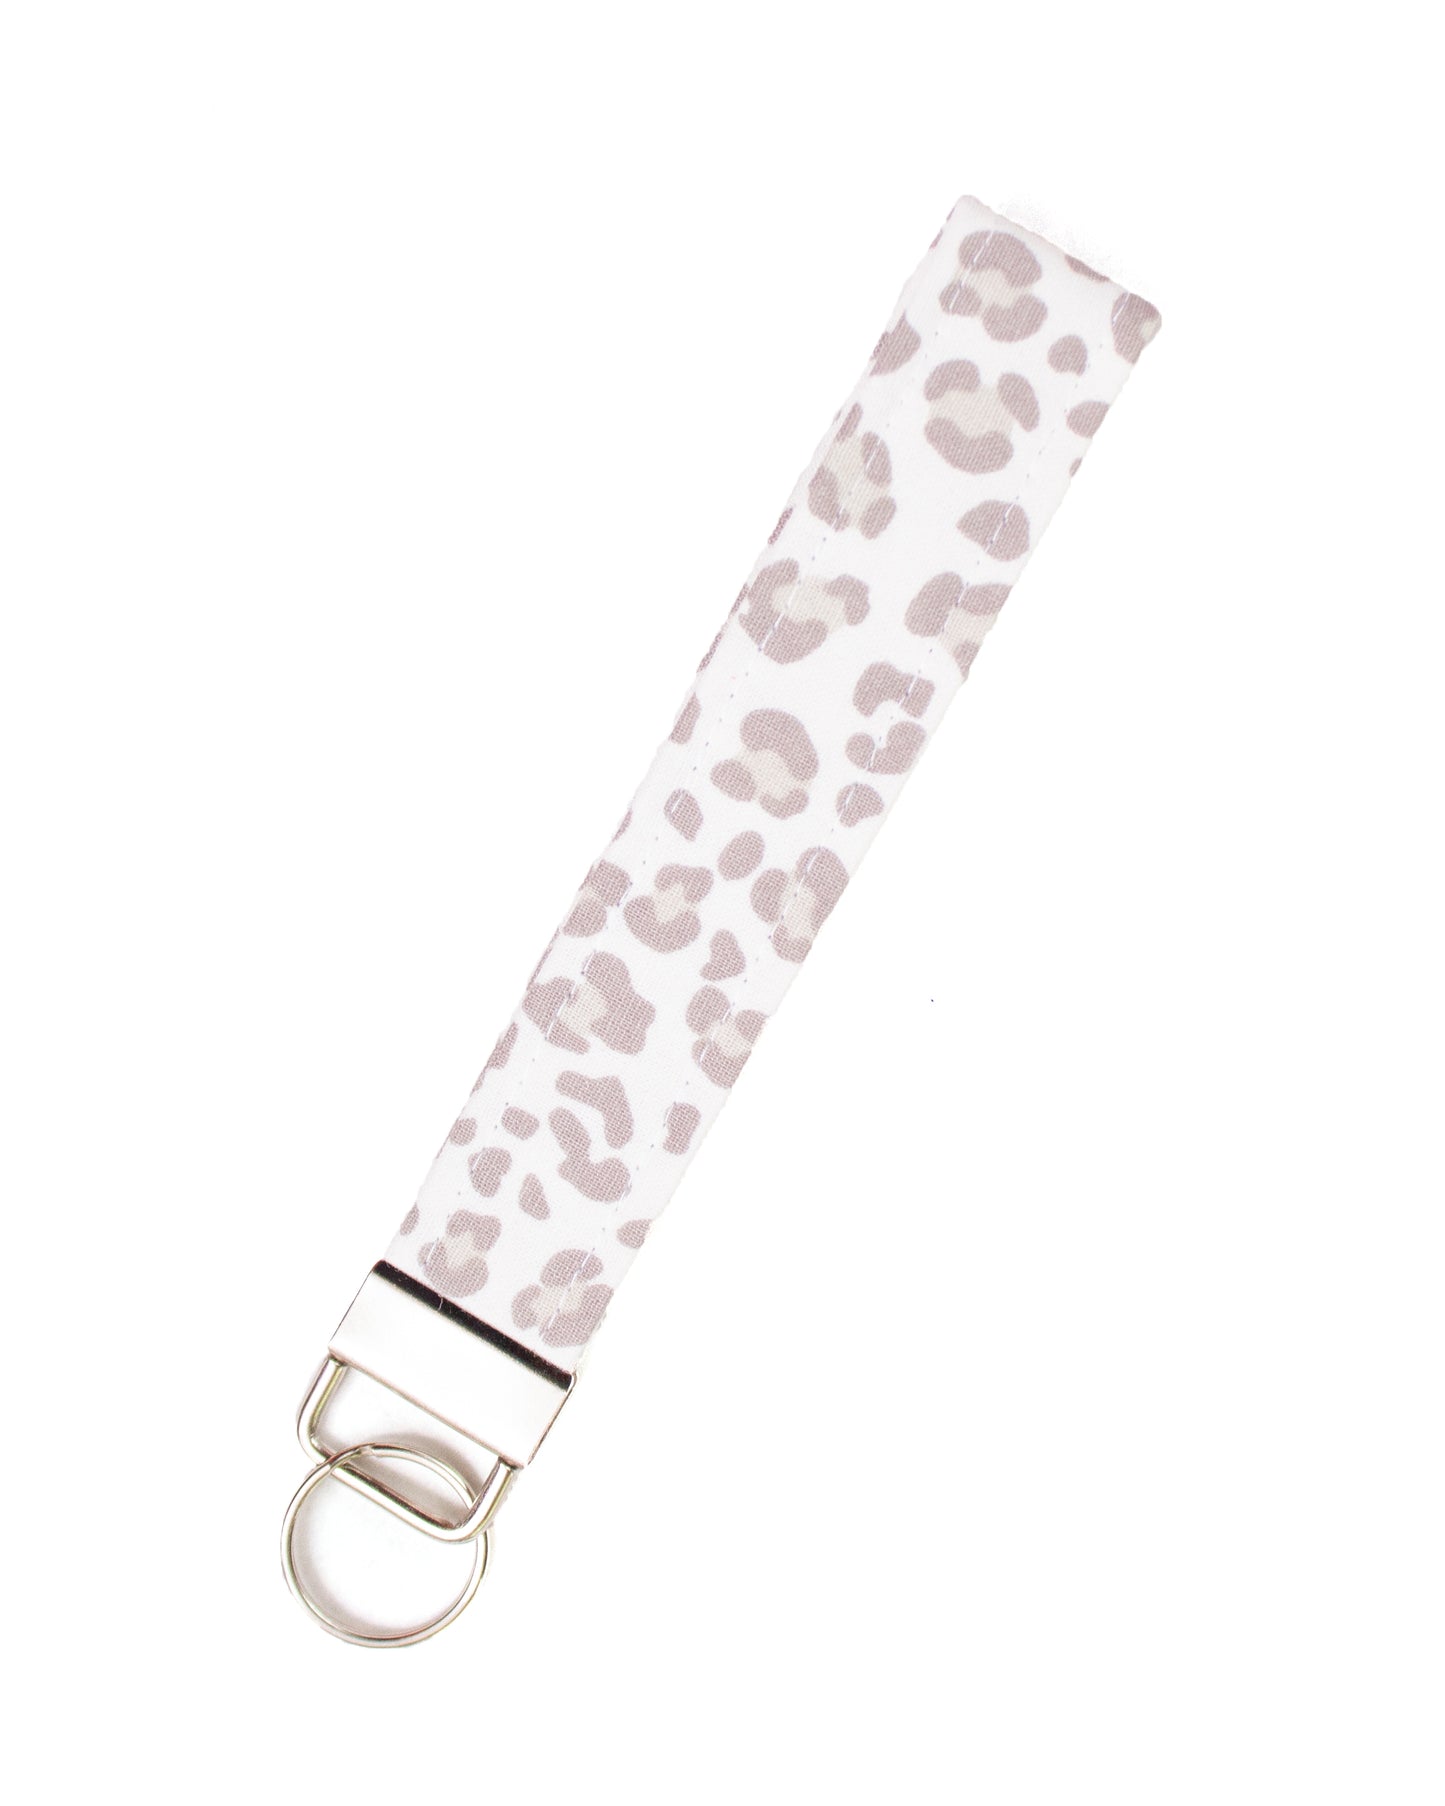 Gray Cheetah 1" inch Fabric Key Fob Wristlet